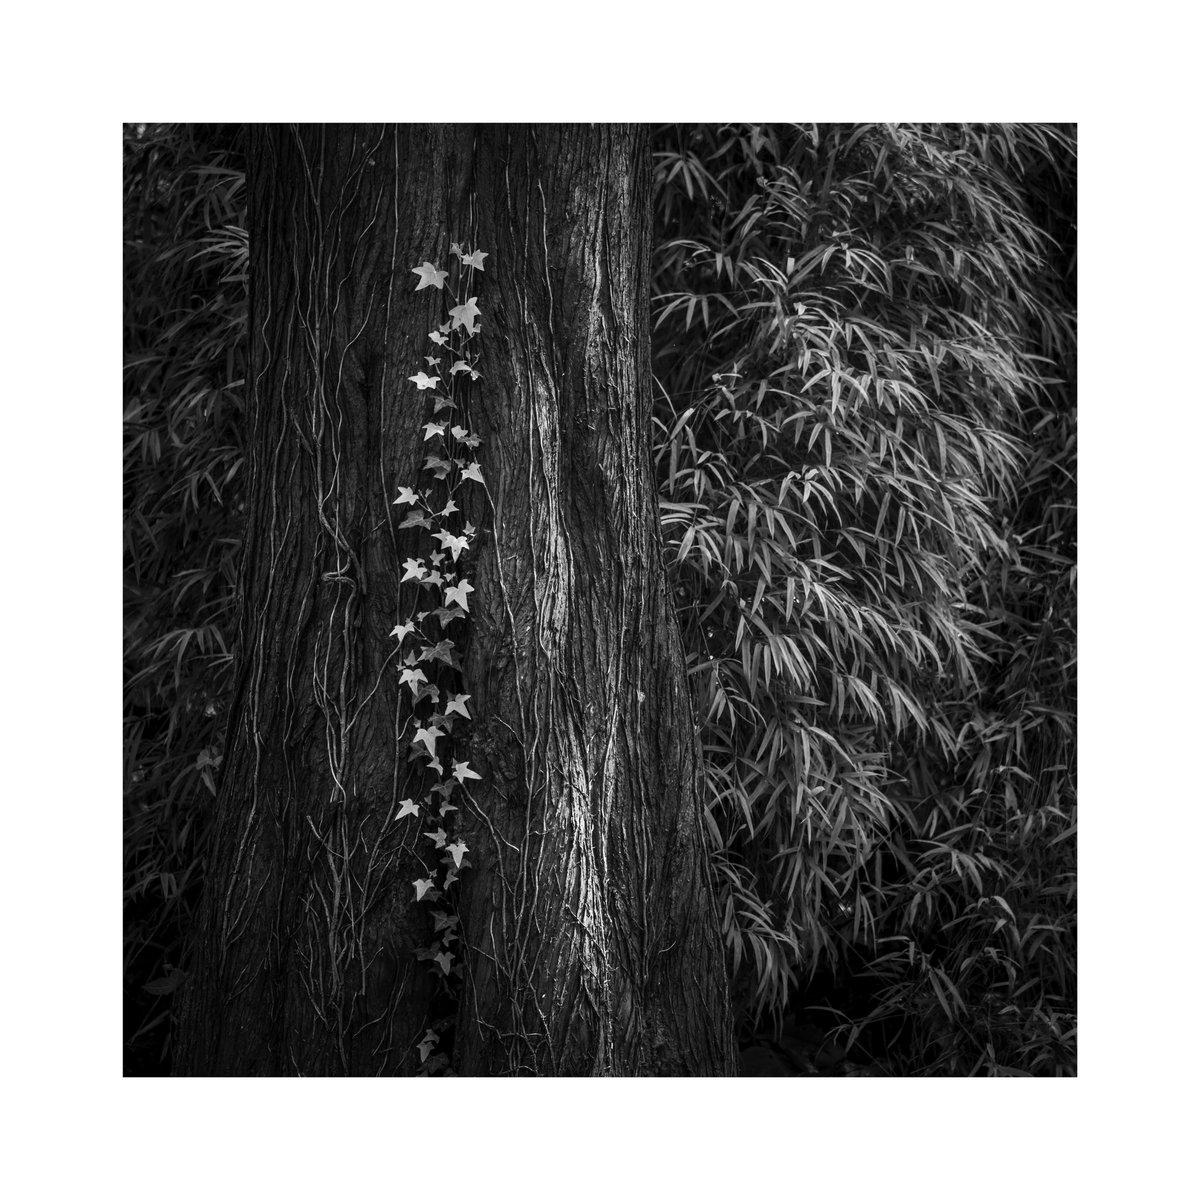 The Lyde Garden No. 52, Buckinghamshire. #photography #monochrome #bnw